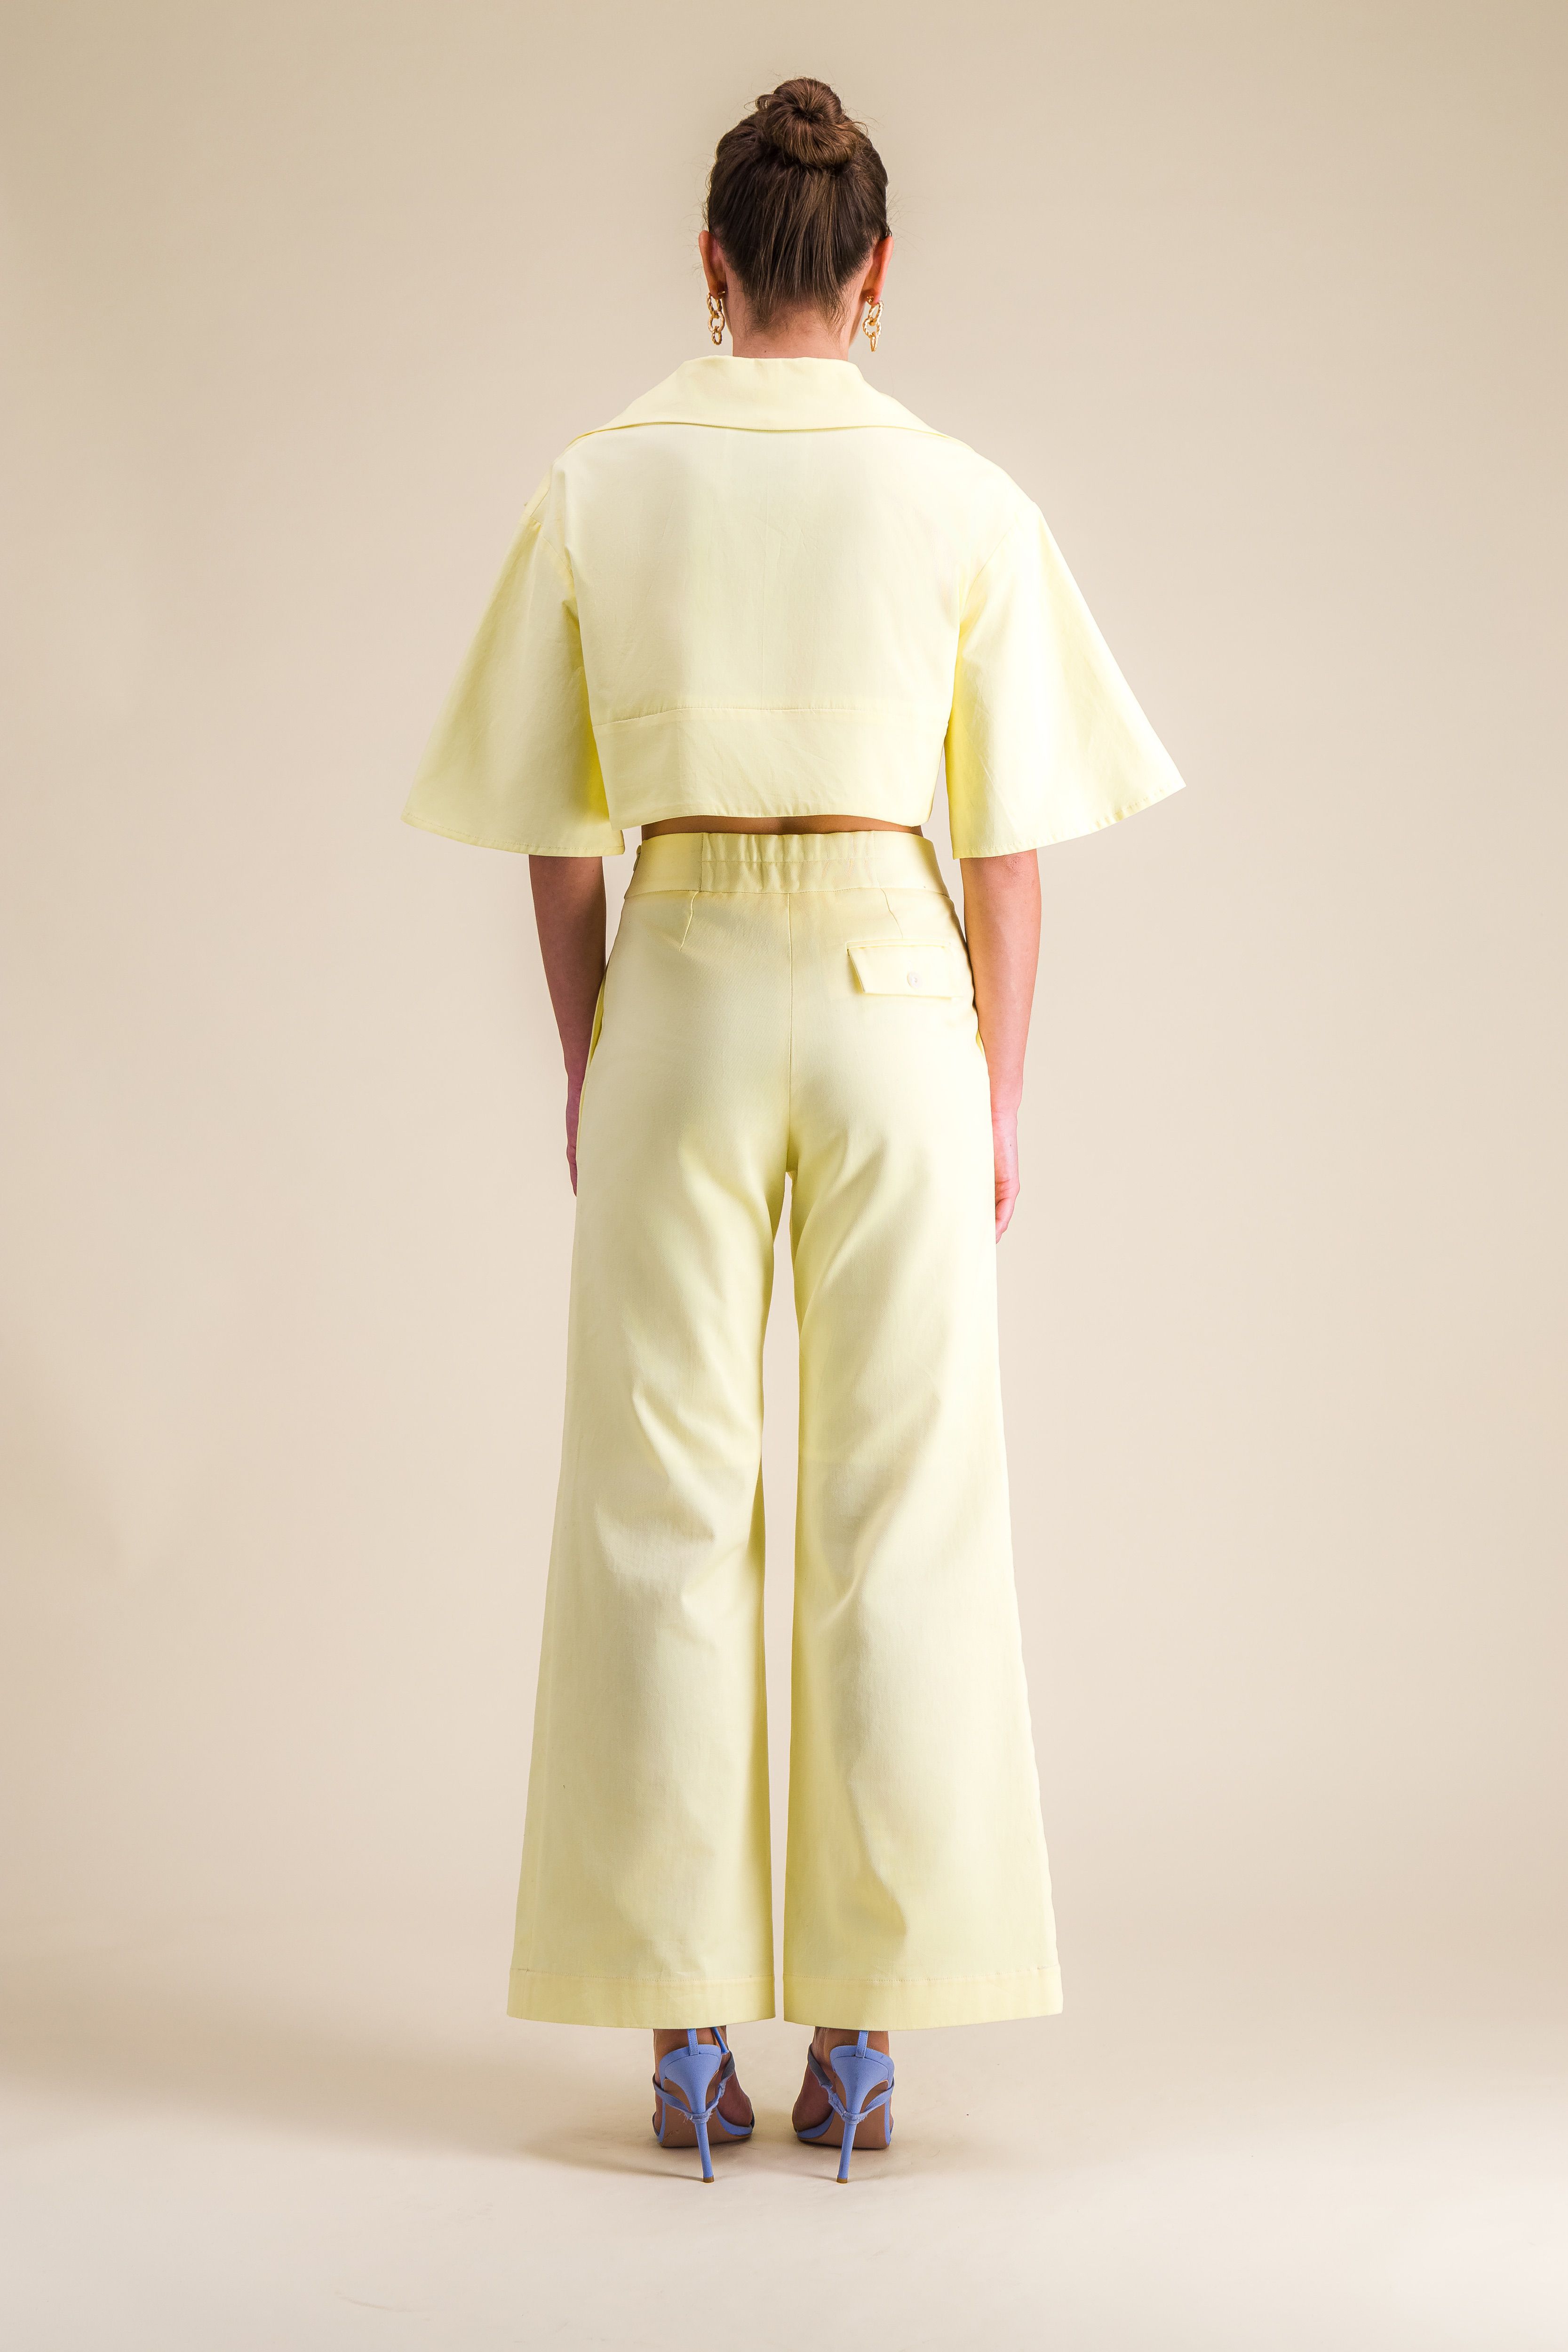 lemon yellow pants - the virgin air uniform